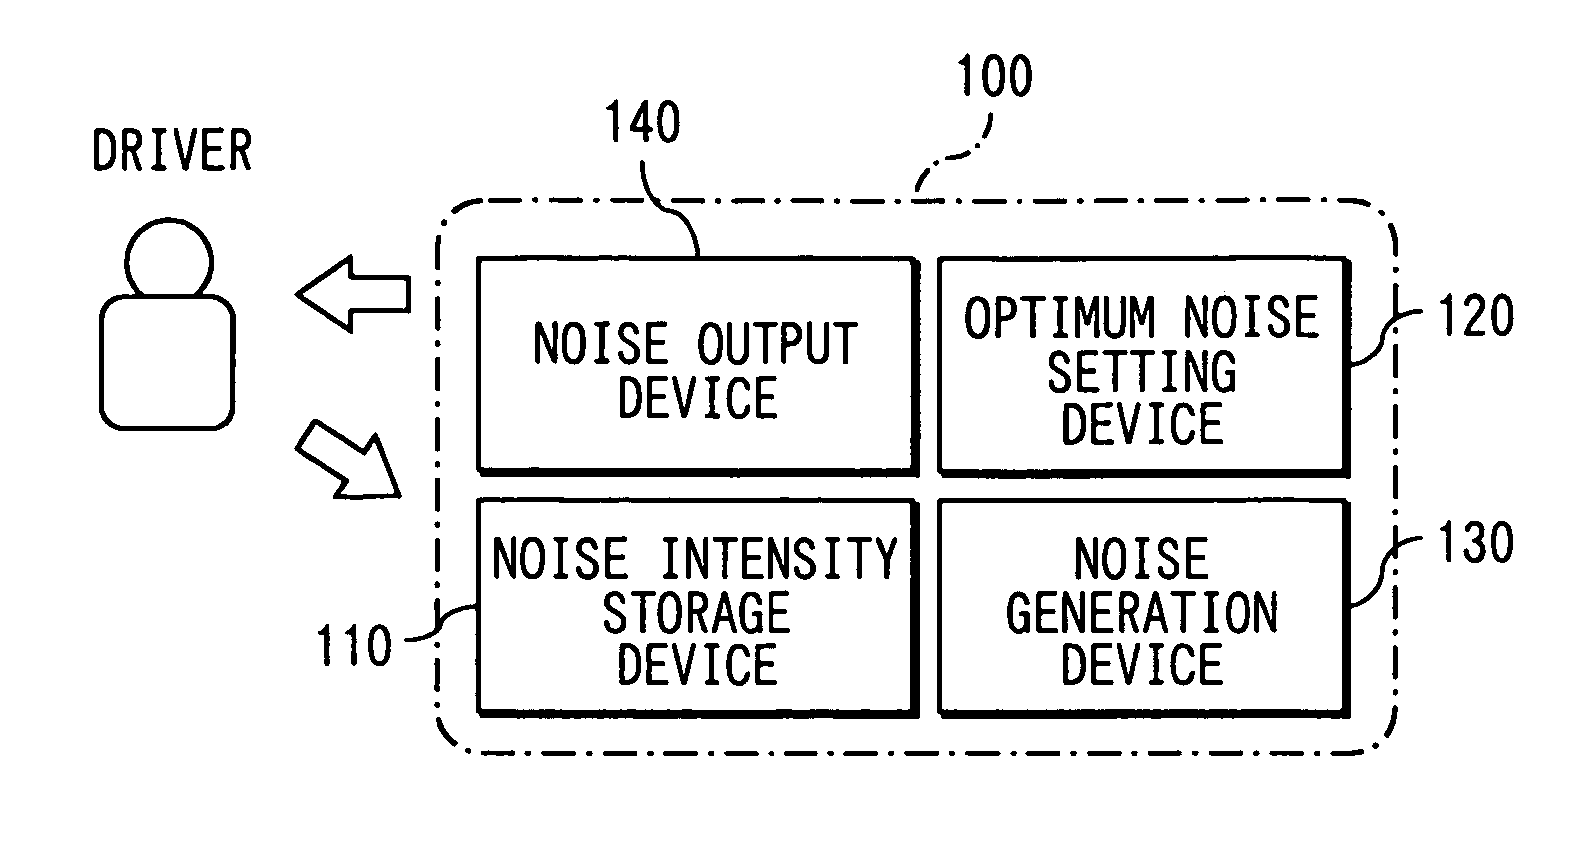 Noise generation apparatus